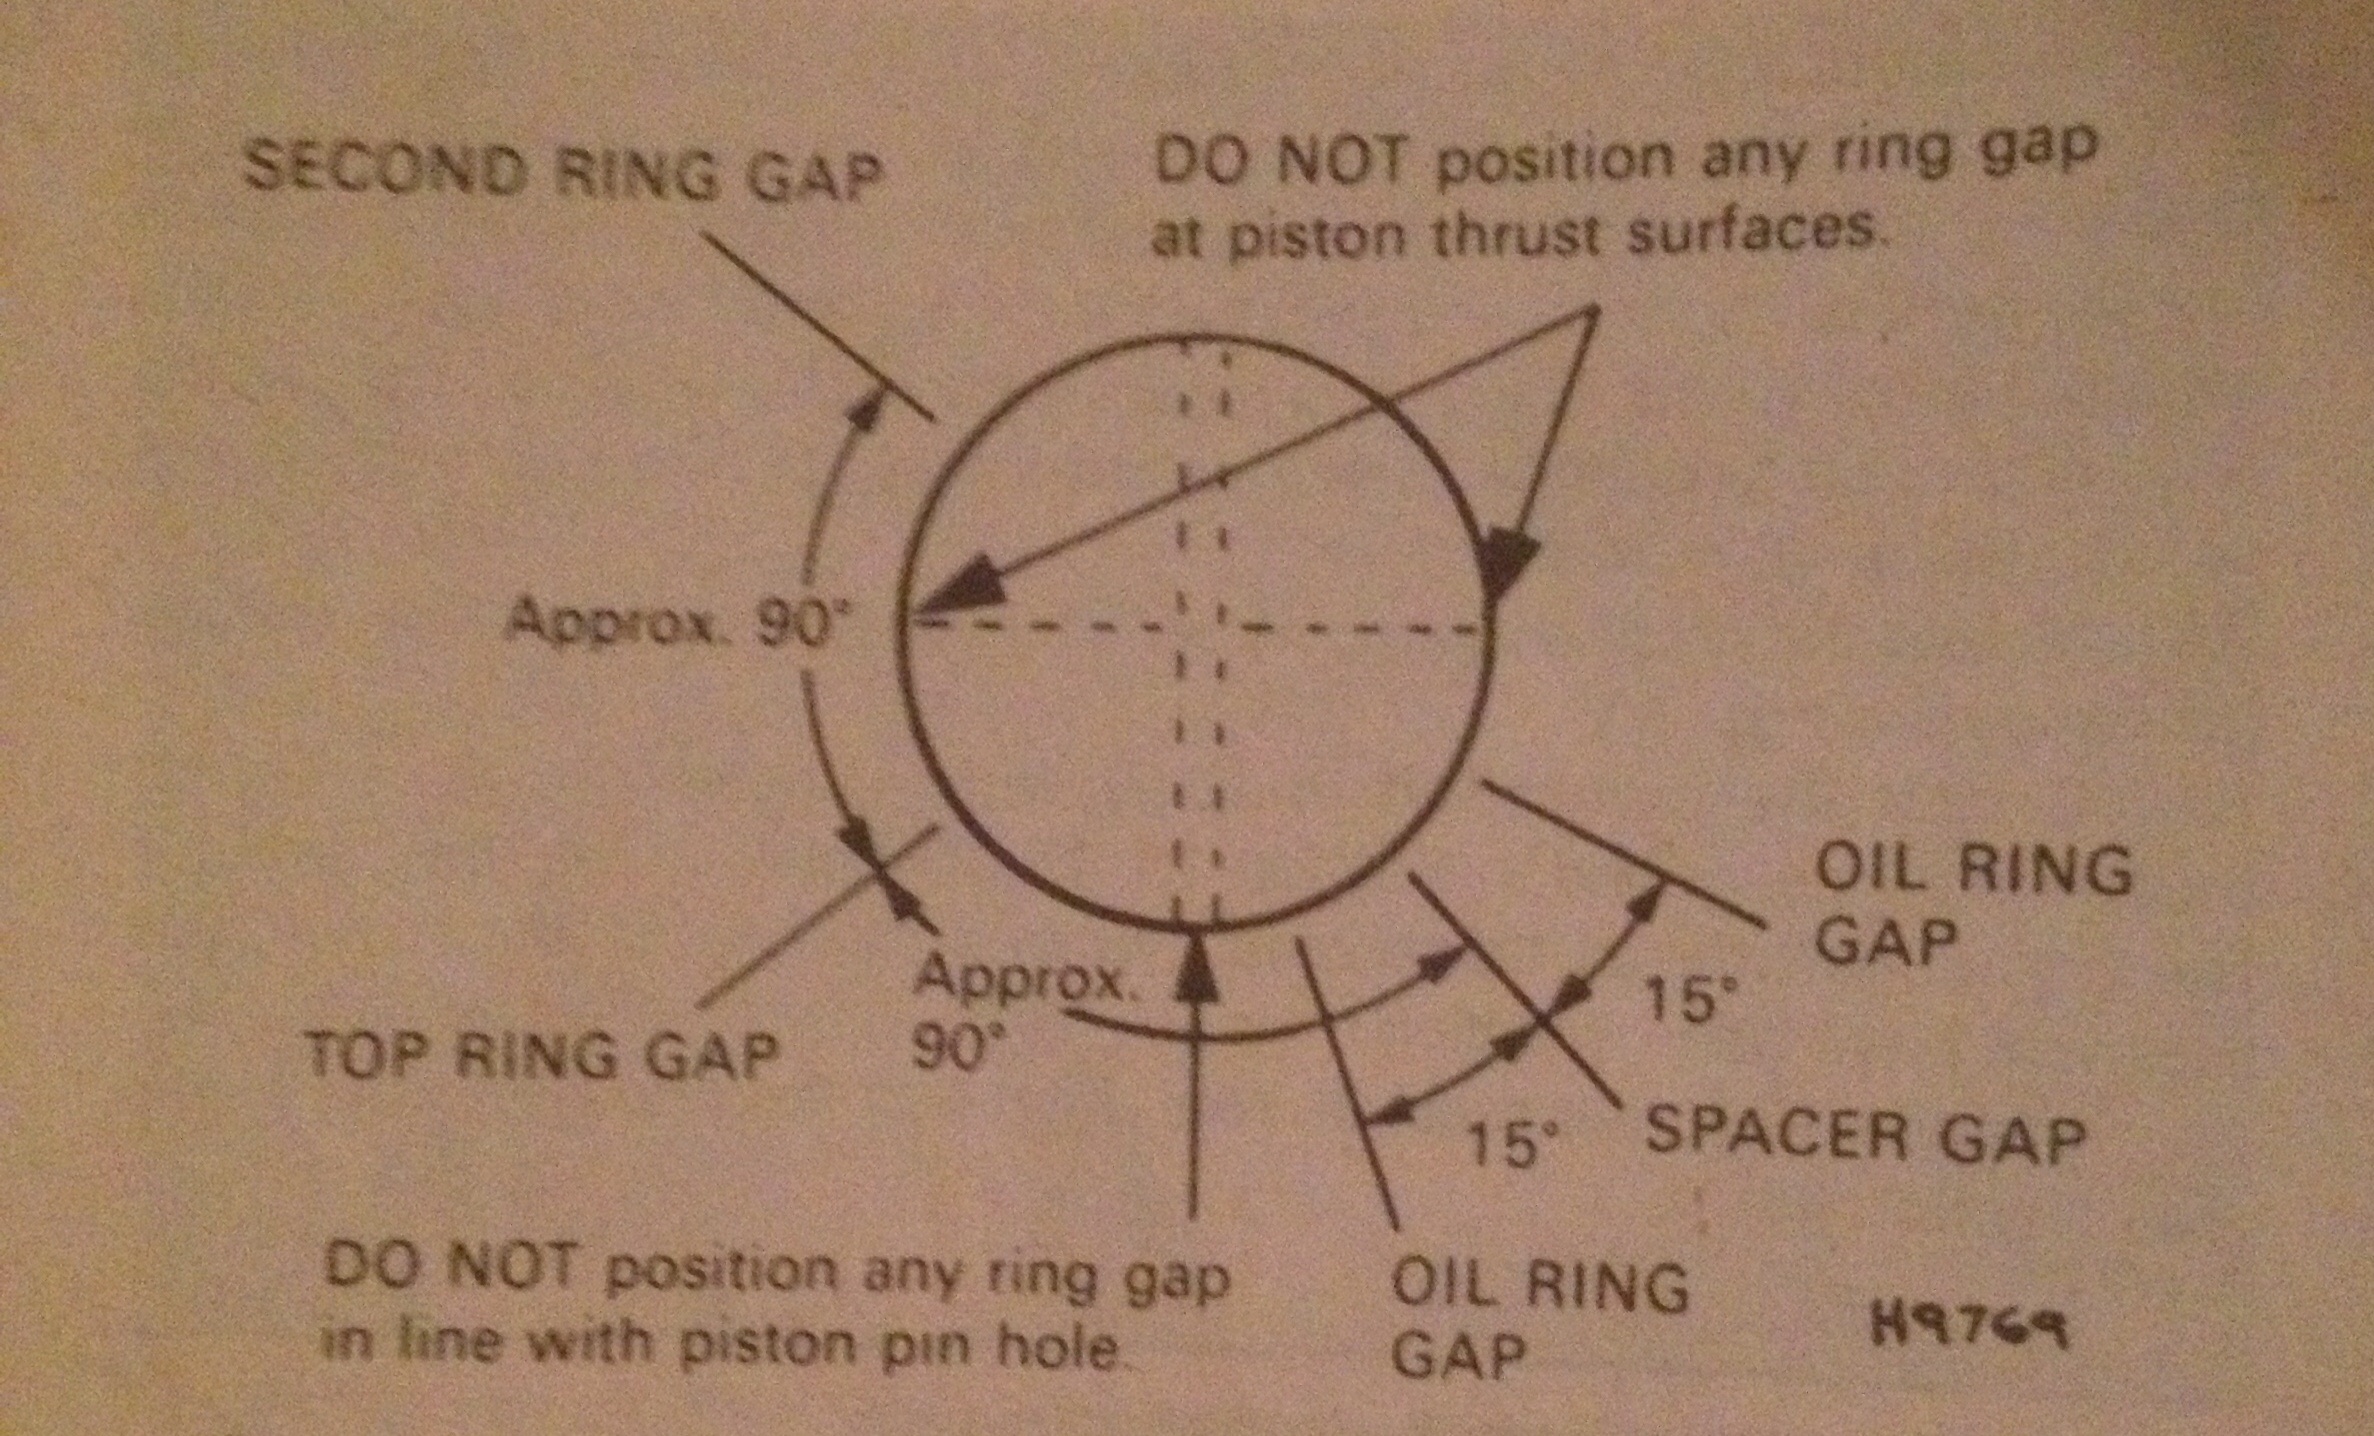 Piston and Piston Rings